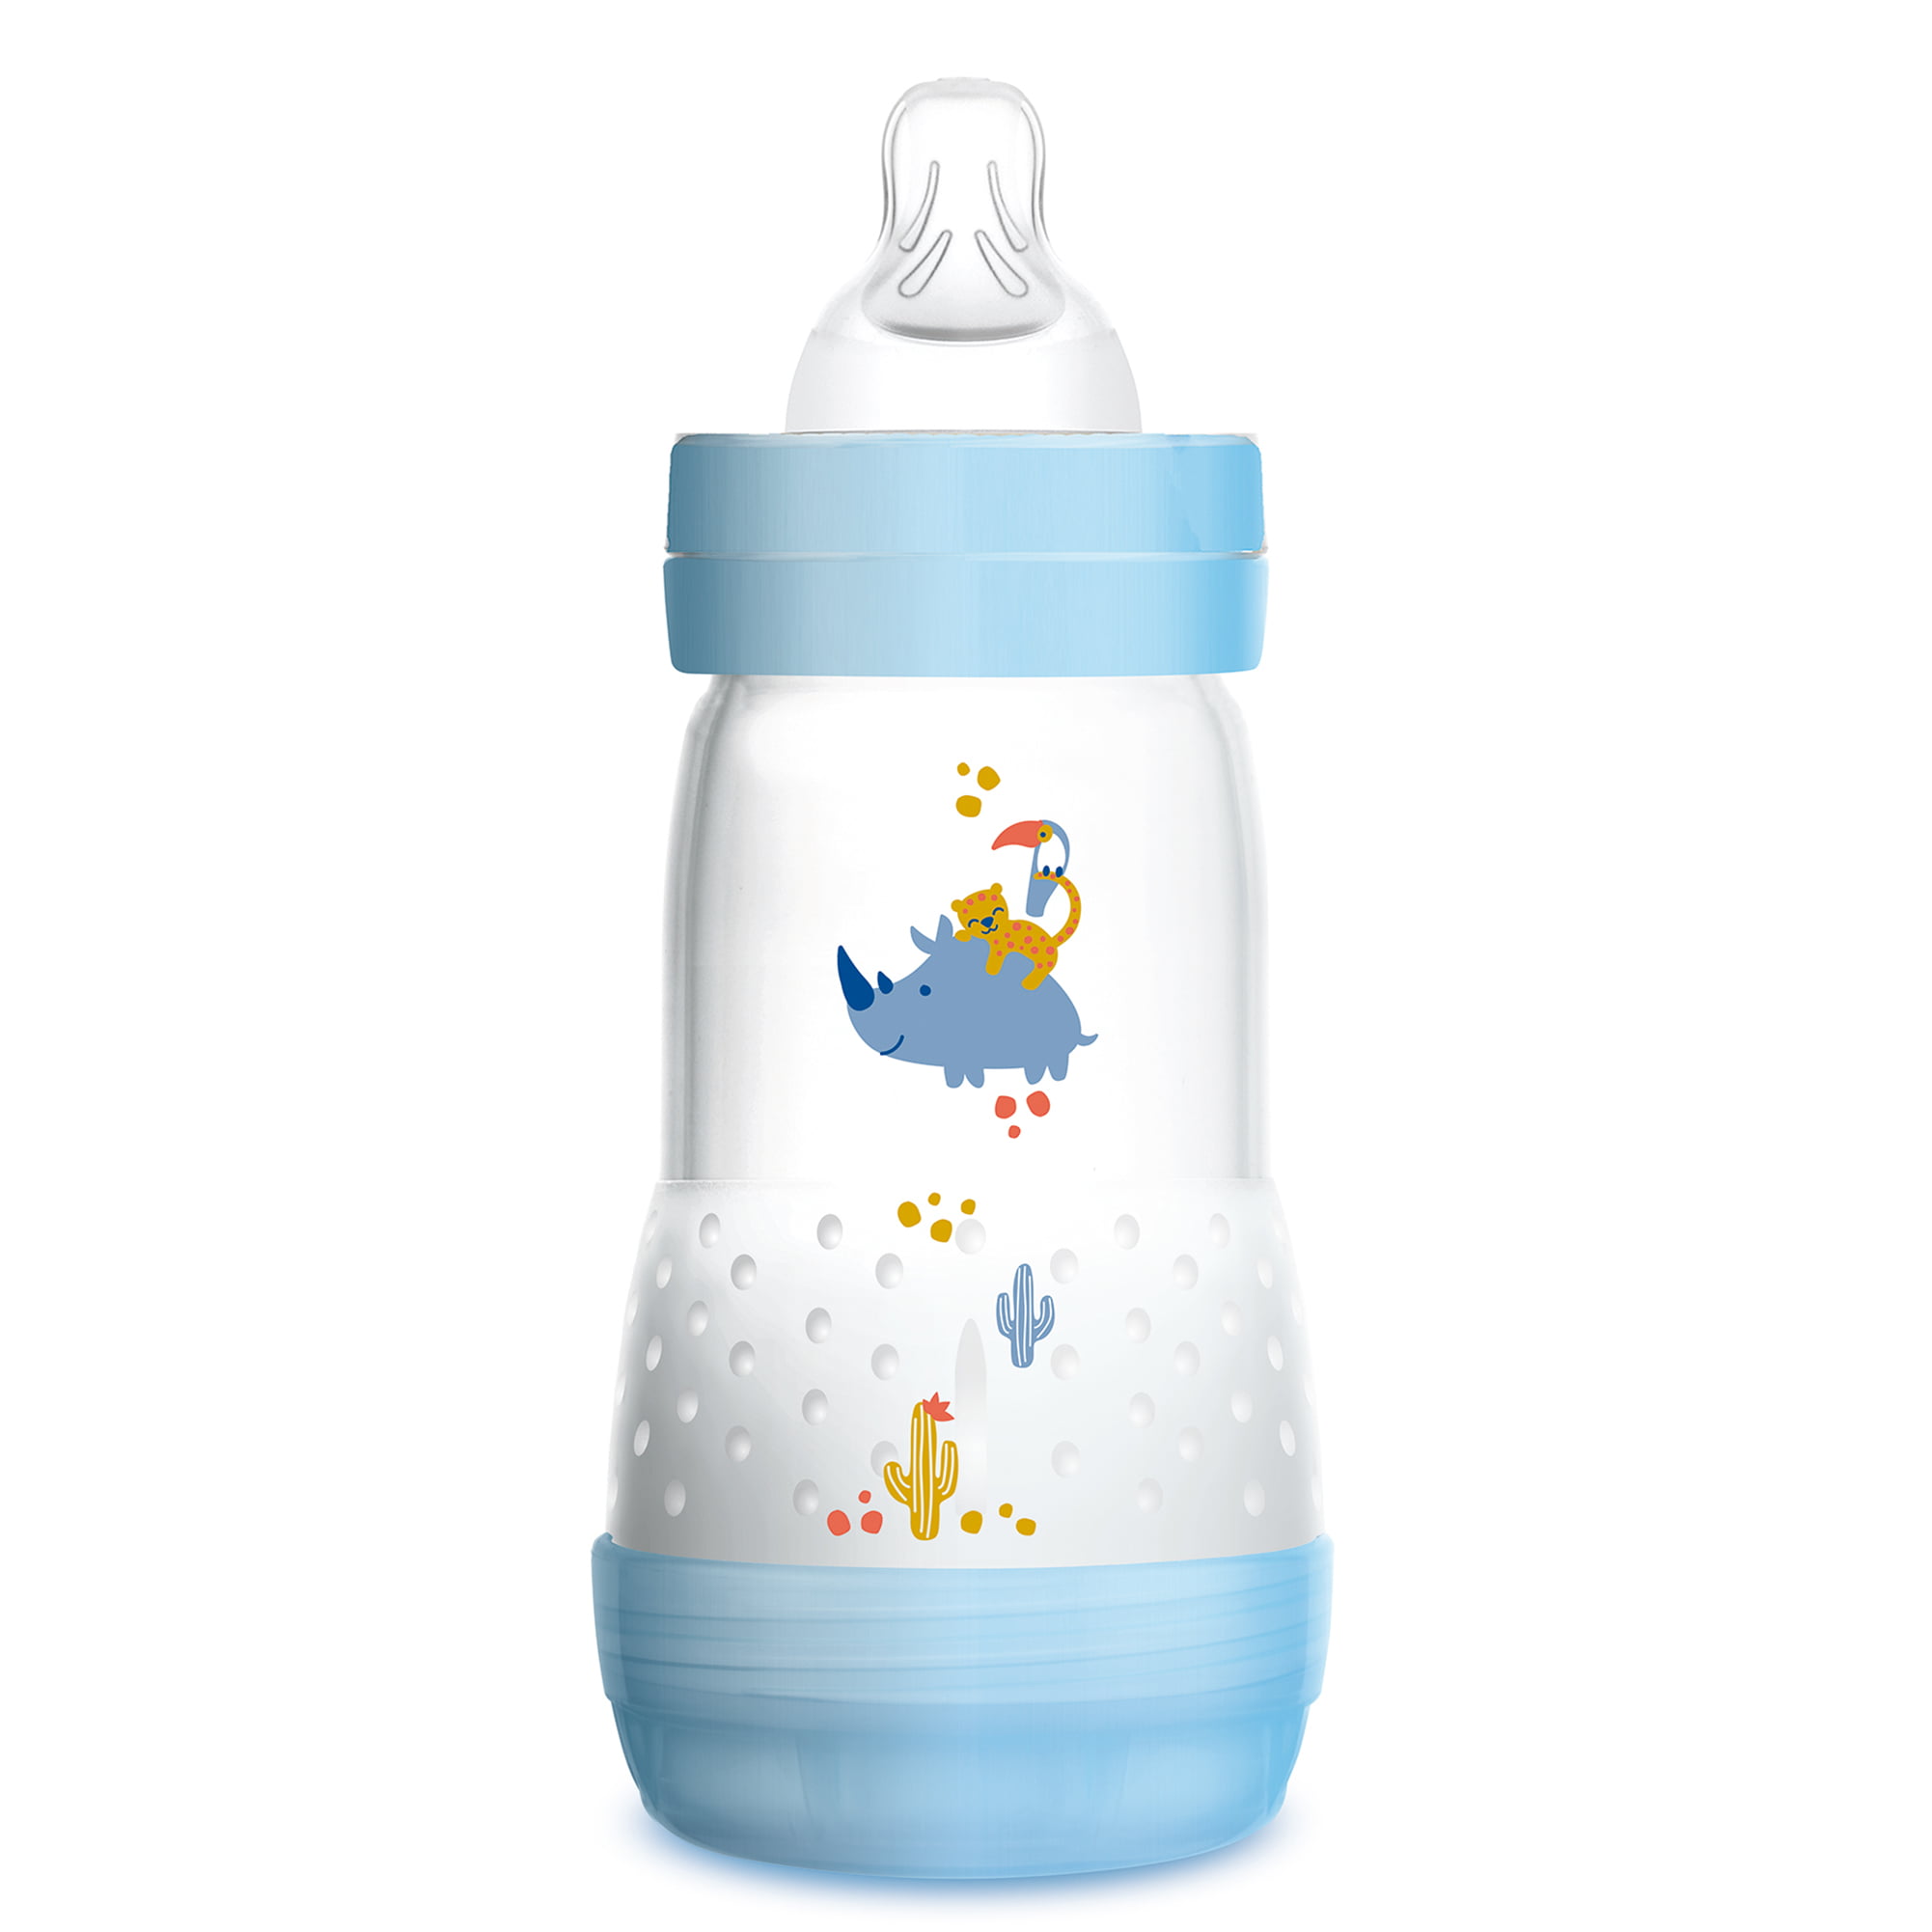 Mam Baby Anti-colic Blue Bottle 320ml, PharmacyClub